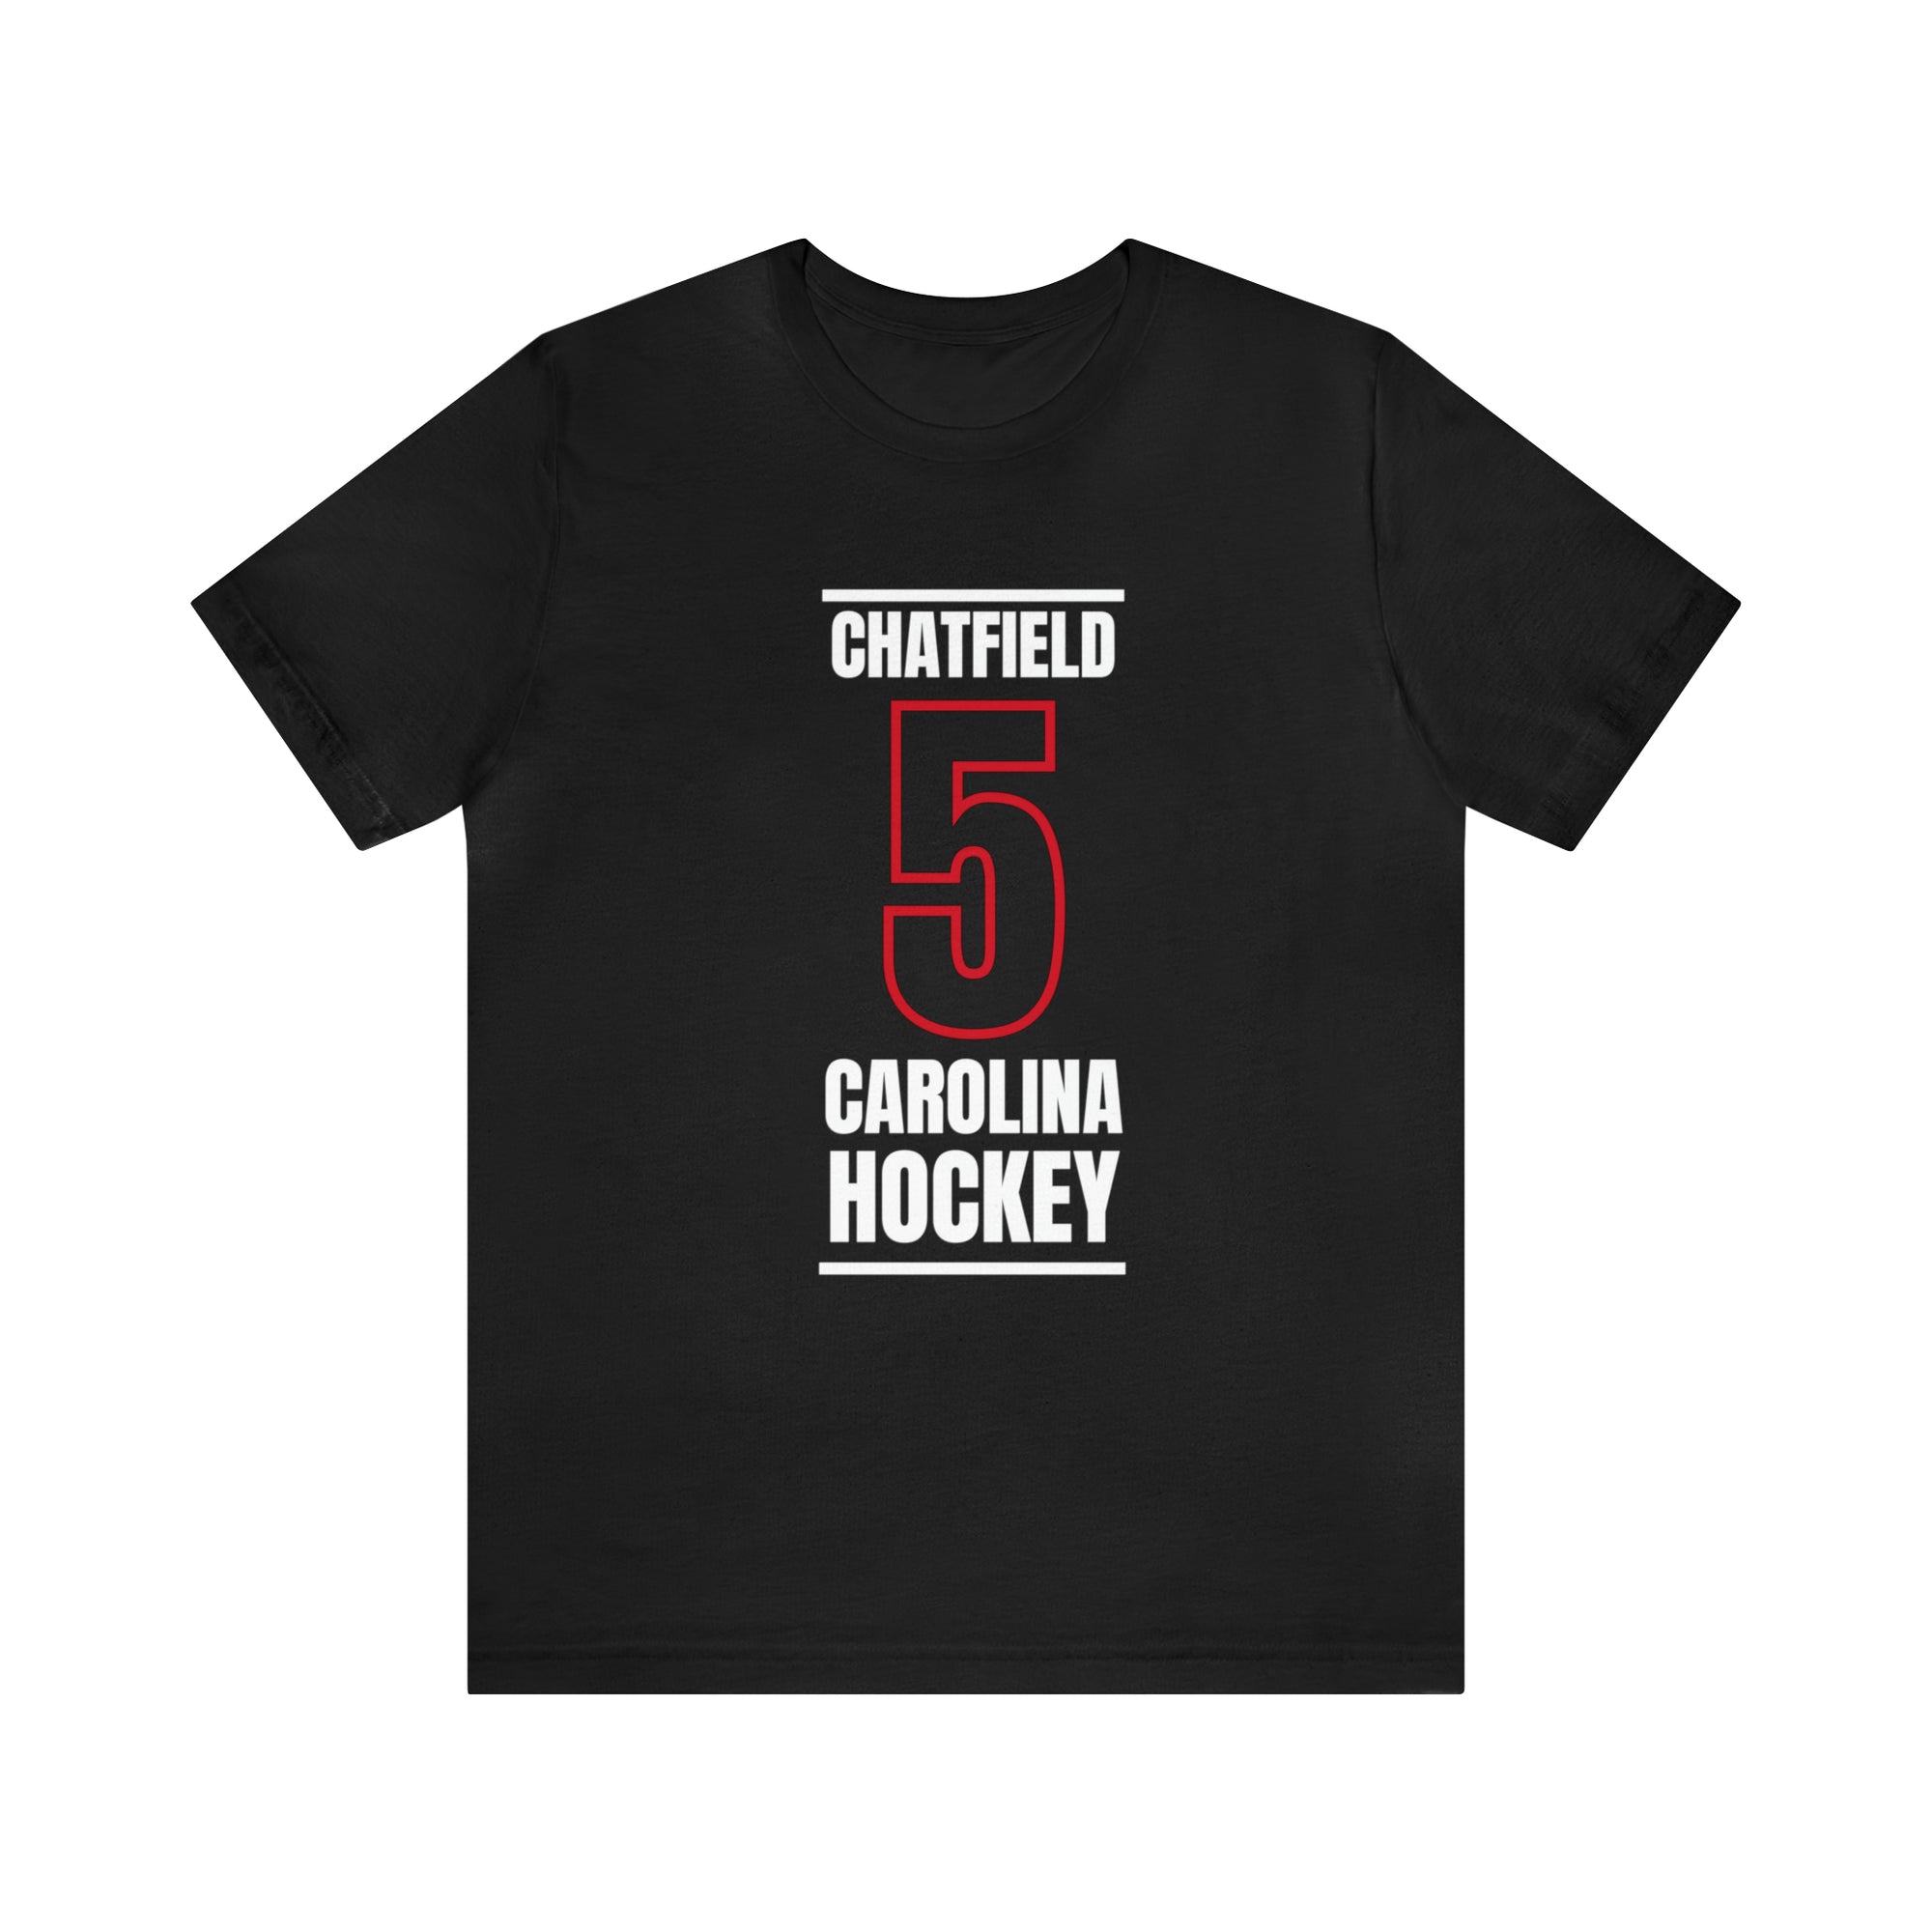 Chatfield 5 Carolina Hockey Black Vertical Design Unisex T-Shirt